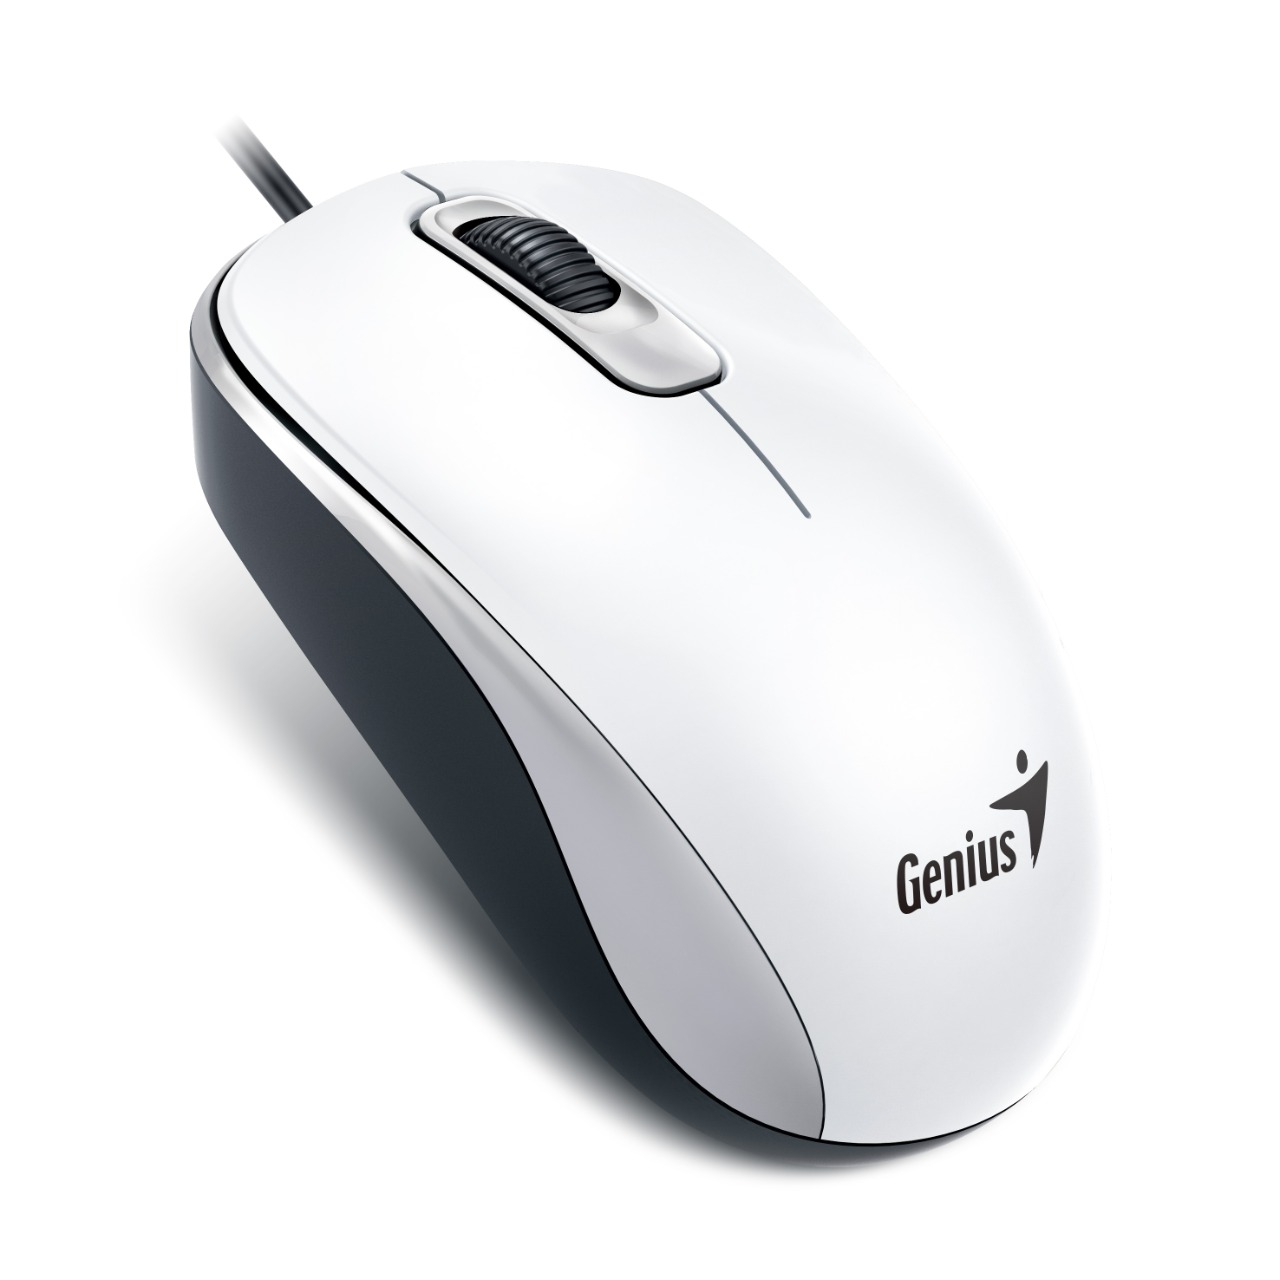 Wholesale mouse : dx-110 classic 3 button usb,1000 dpi ,white, g5, with smart genius app